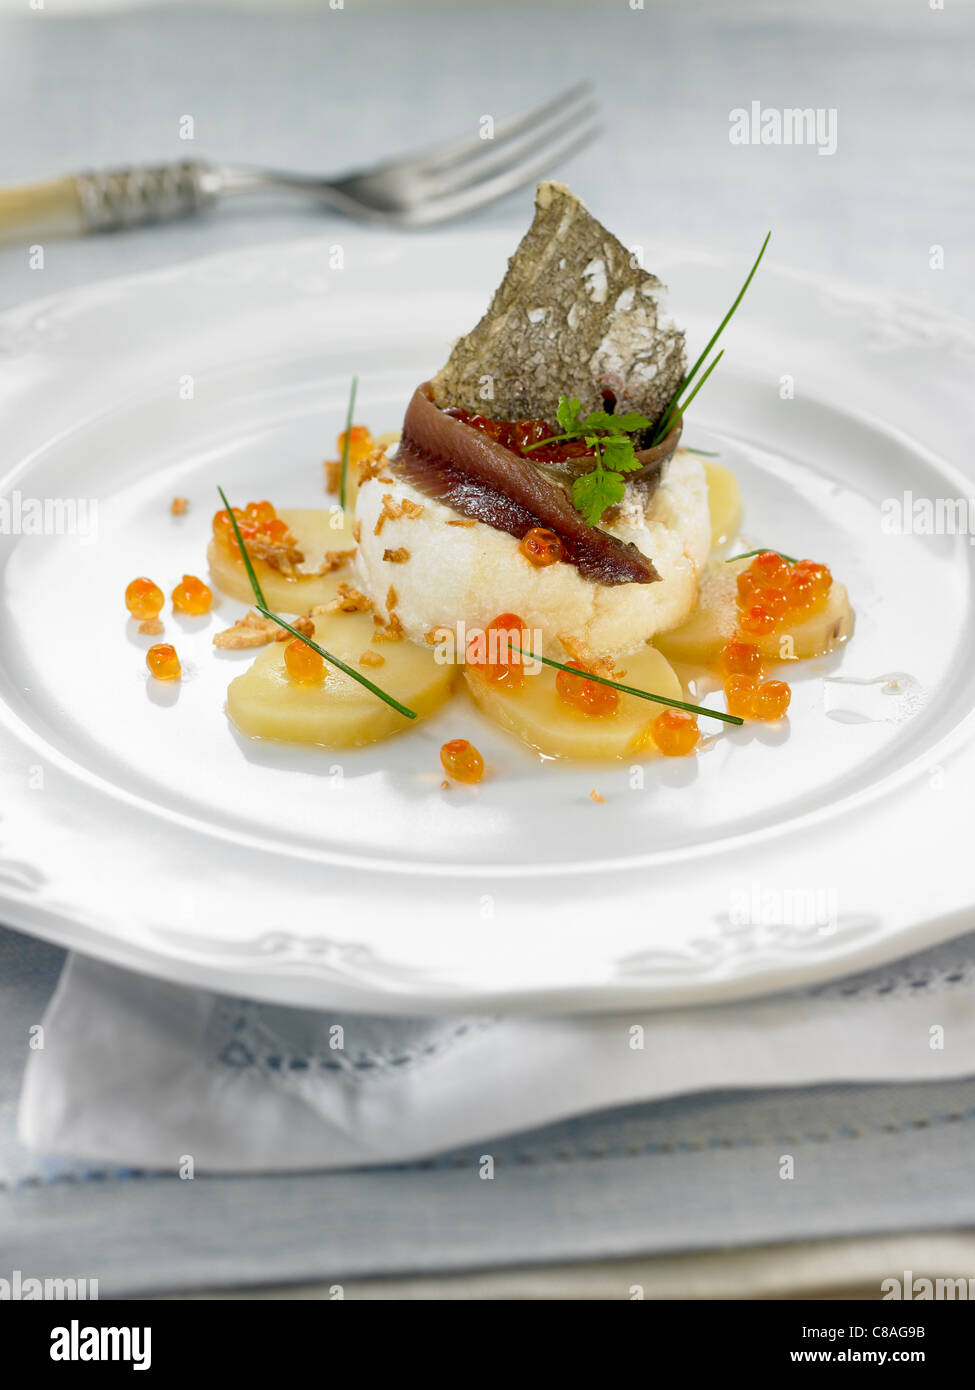 Salt-cod brandade with salmon roe Stock Photo